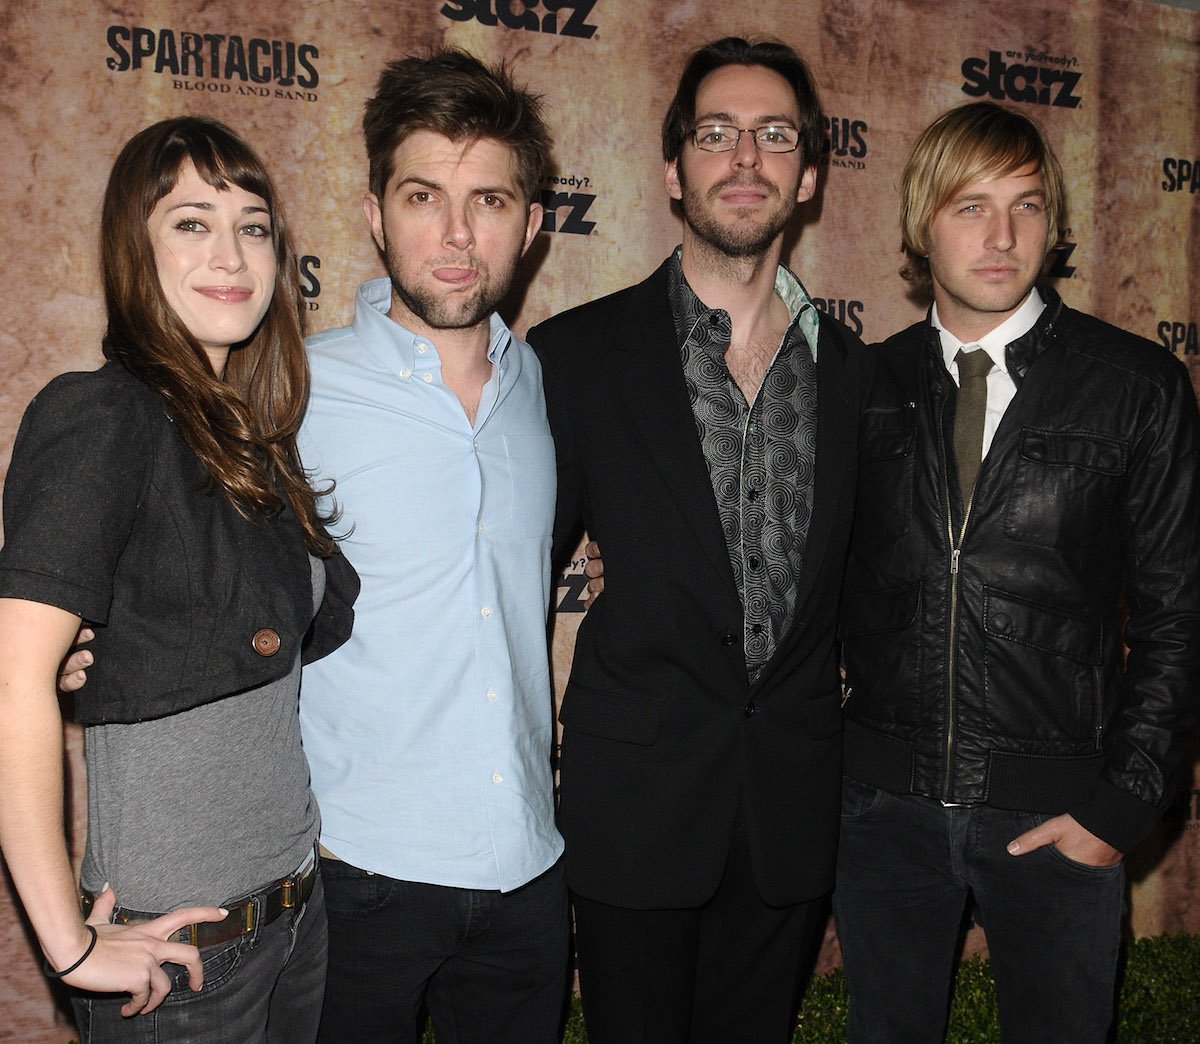 Cast members Lizzy Caplan, Adam Scott, Martin Starr, and Ryan Hansen attend a movie screening in 2010